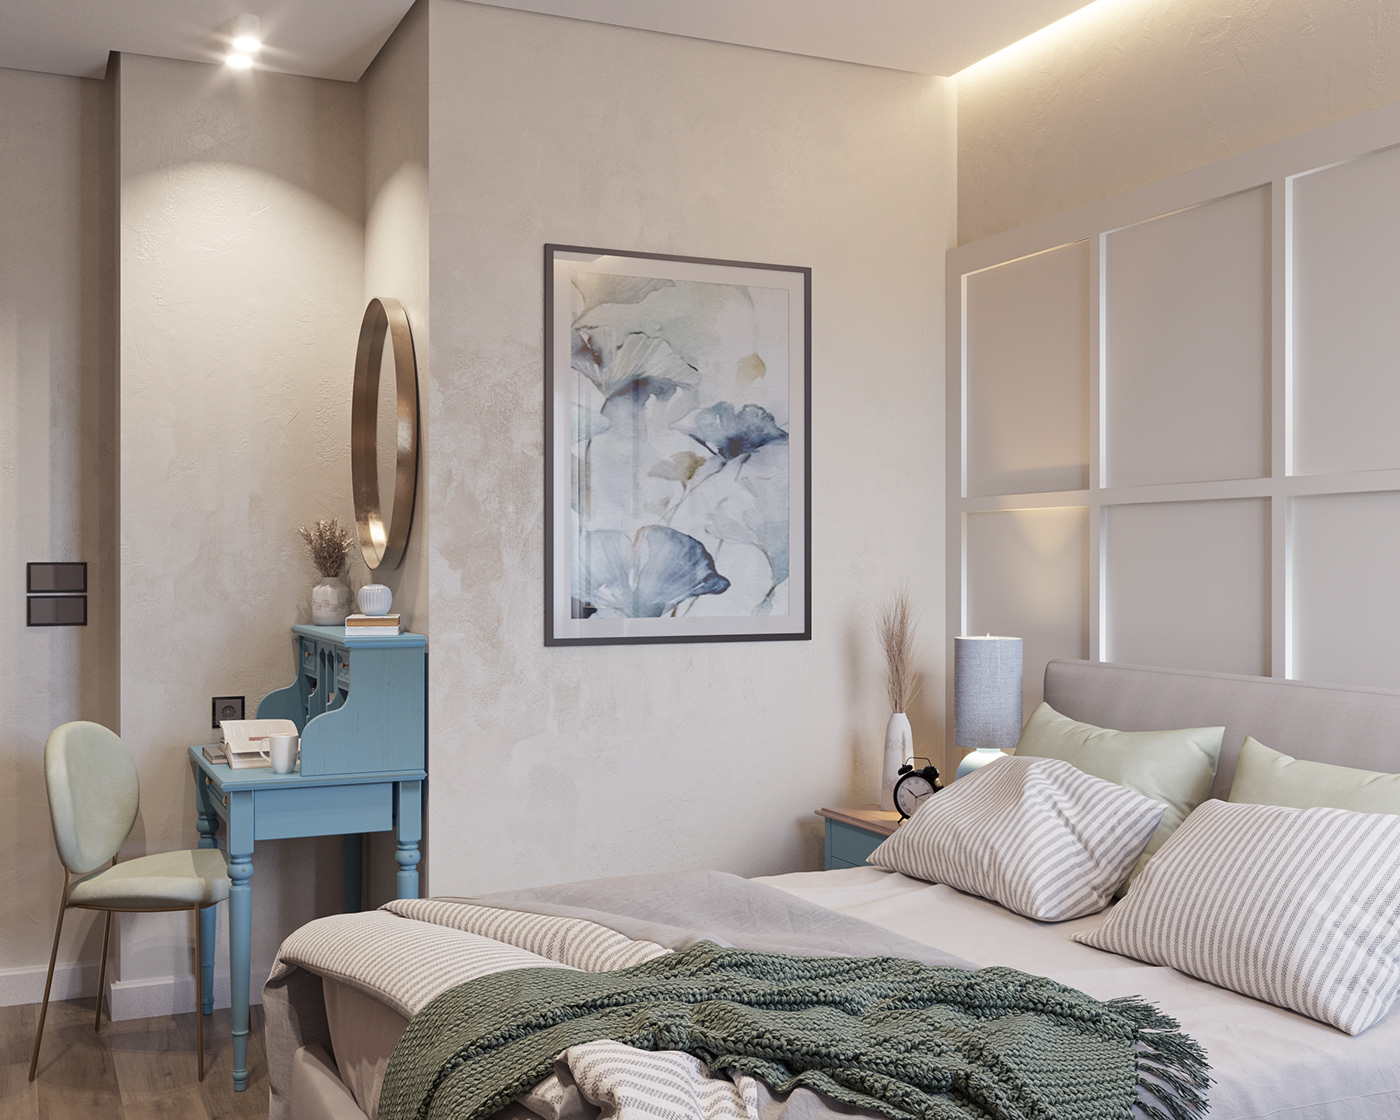 #eclectic bathroom Interior design 3ds max photoshop bedroom modeling interior design  Render